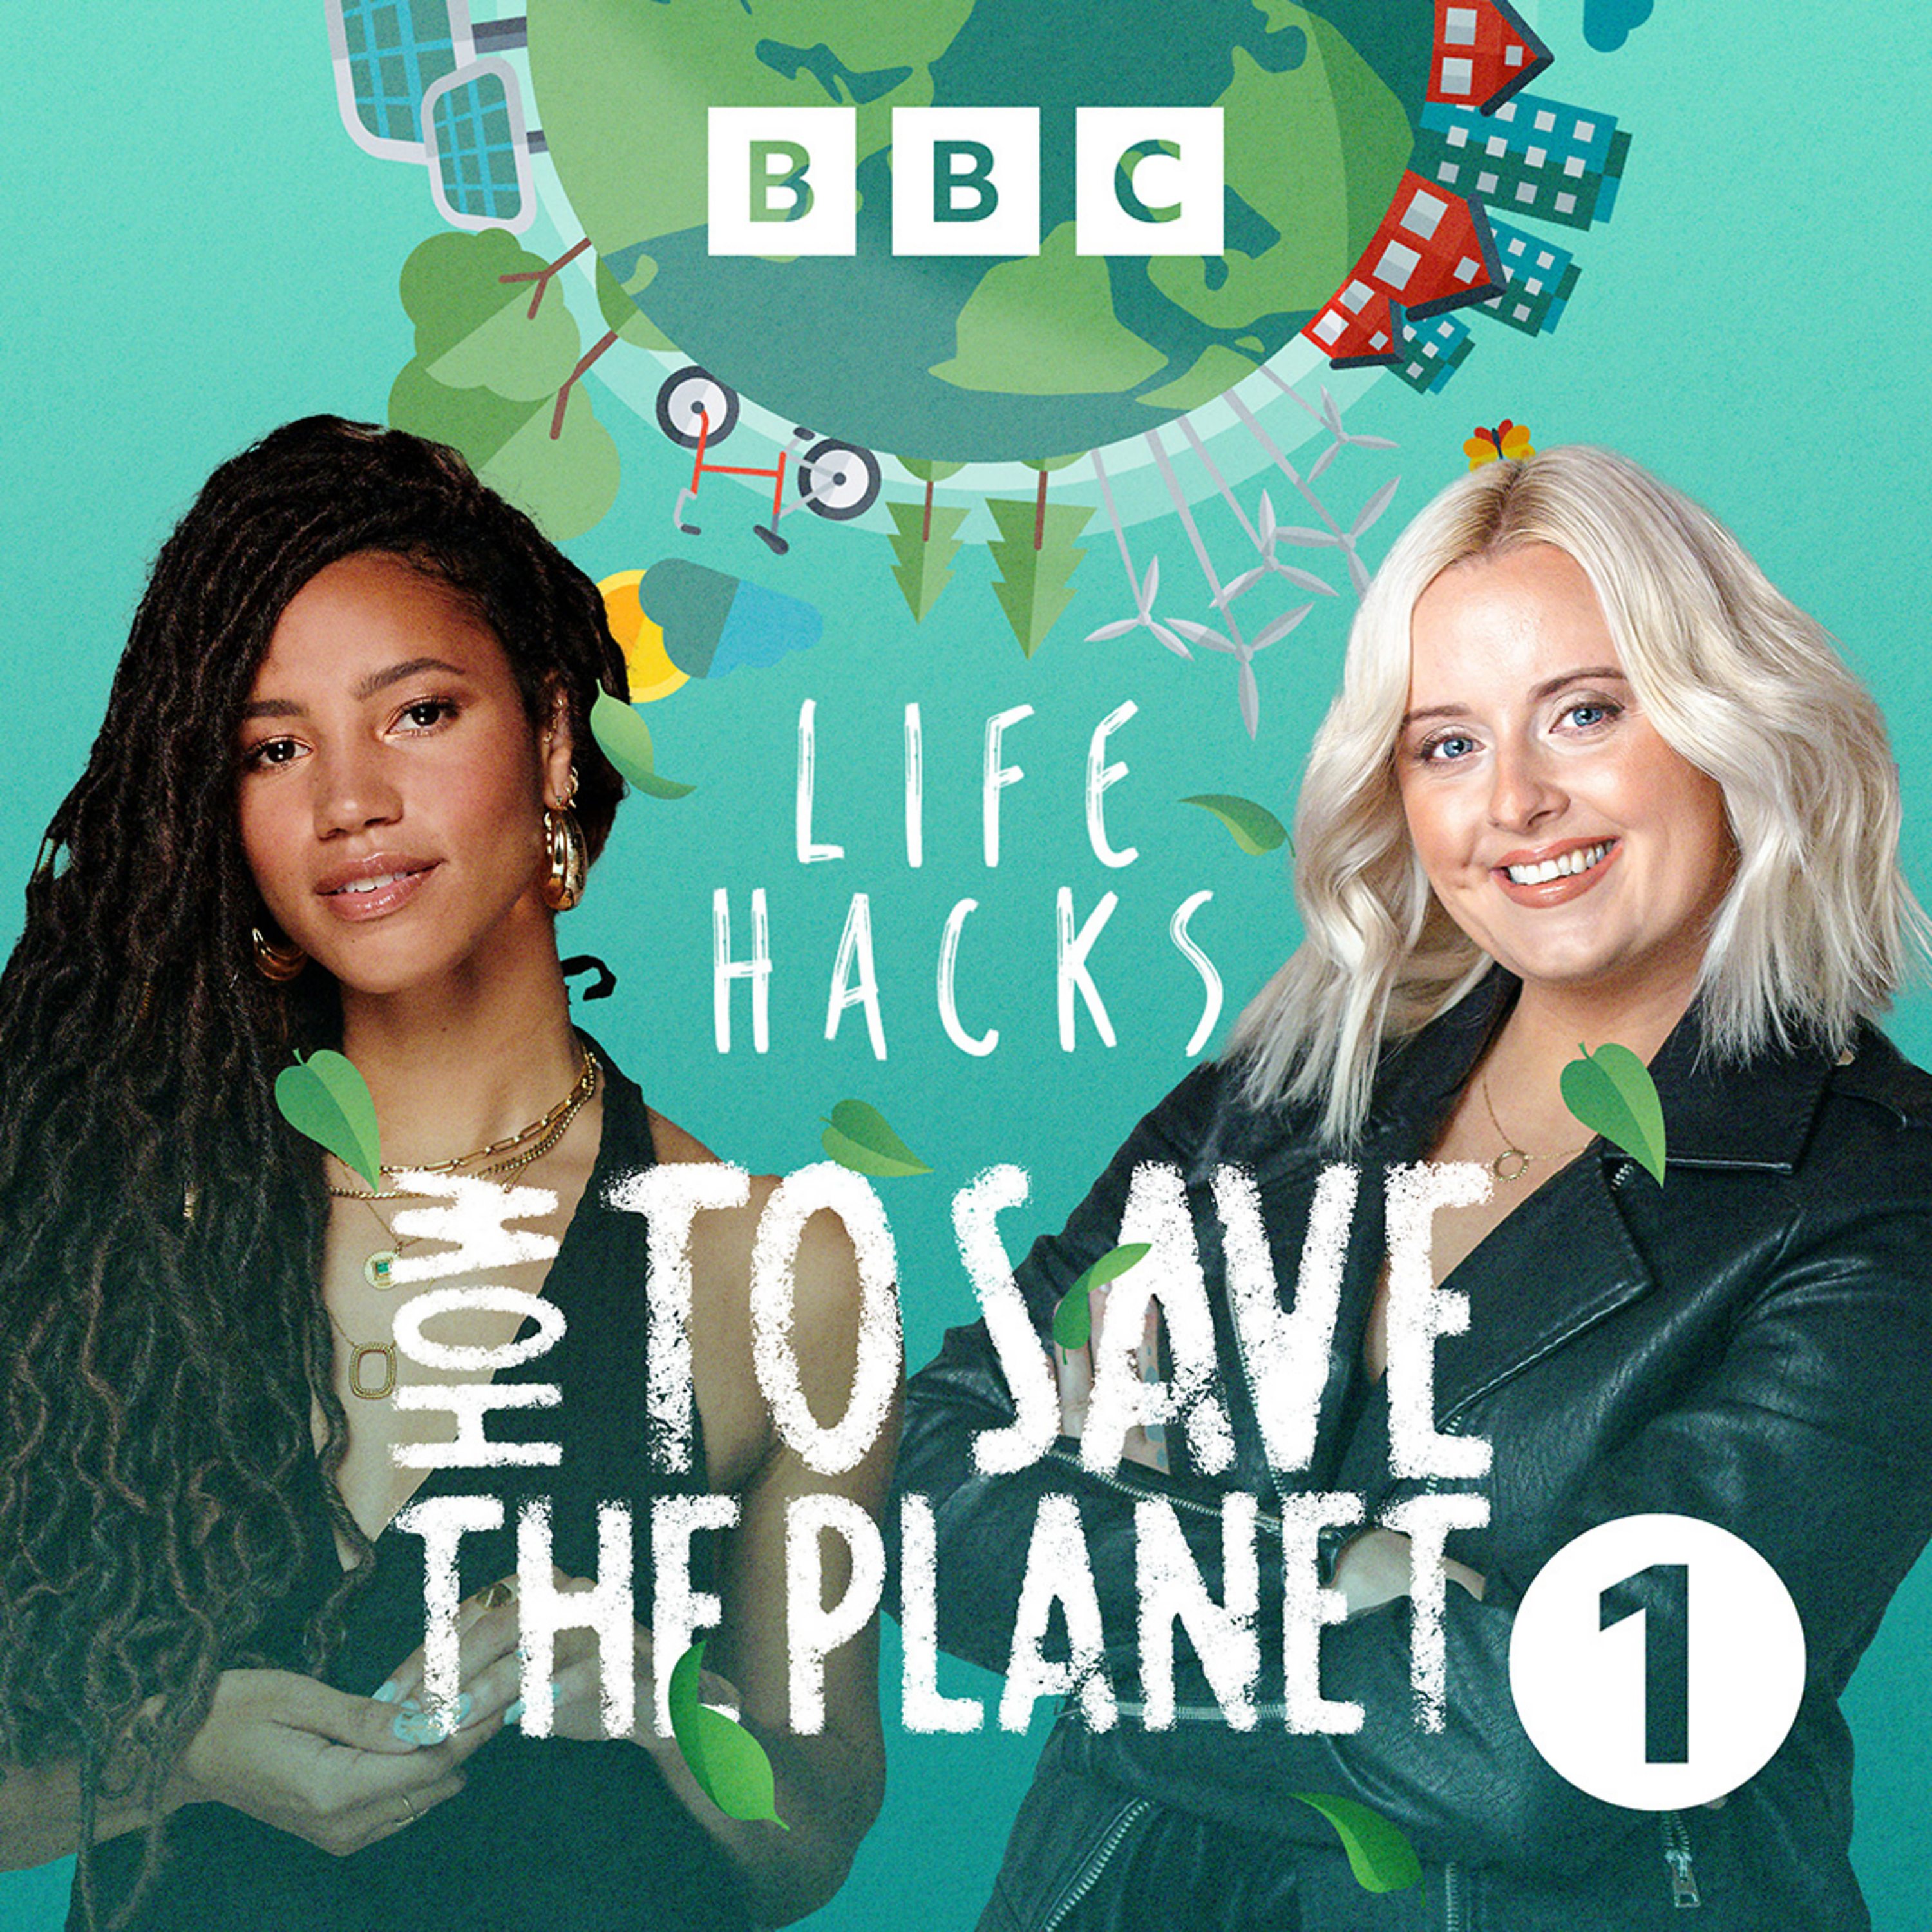 Radio 1’s Life Hacks – The Podcast podcast show image